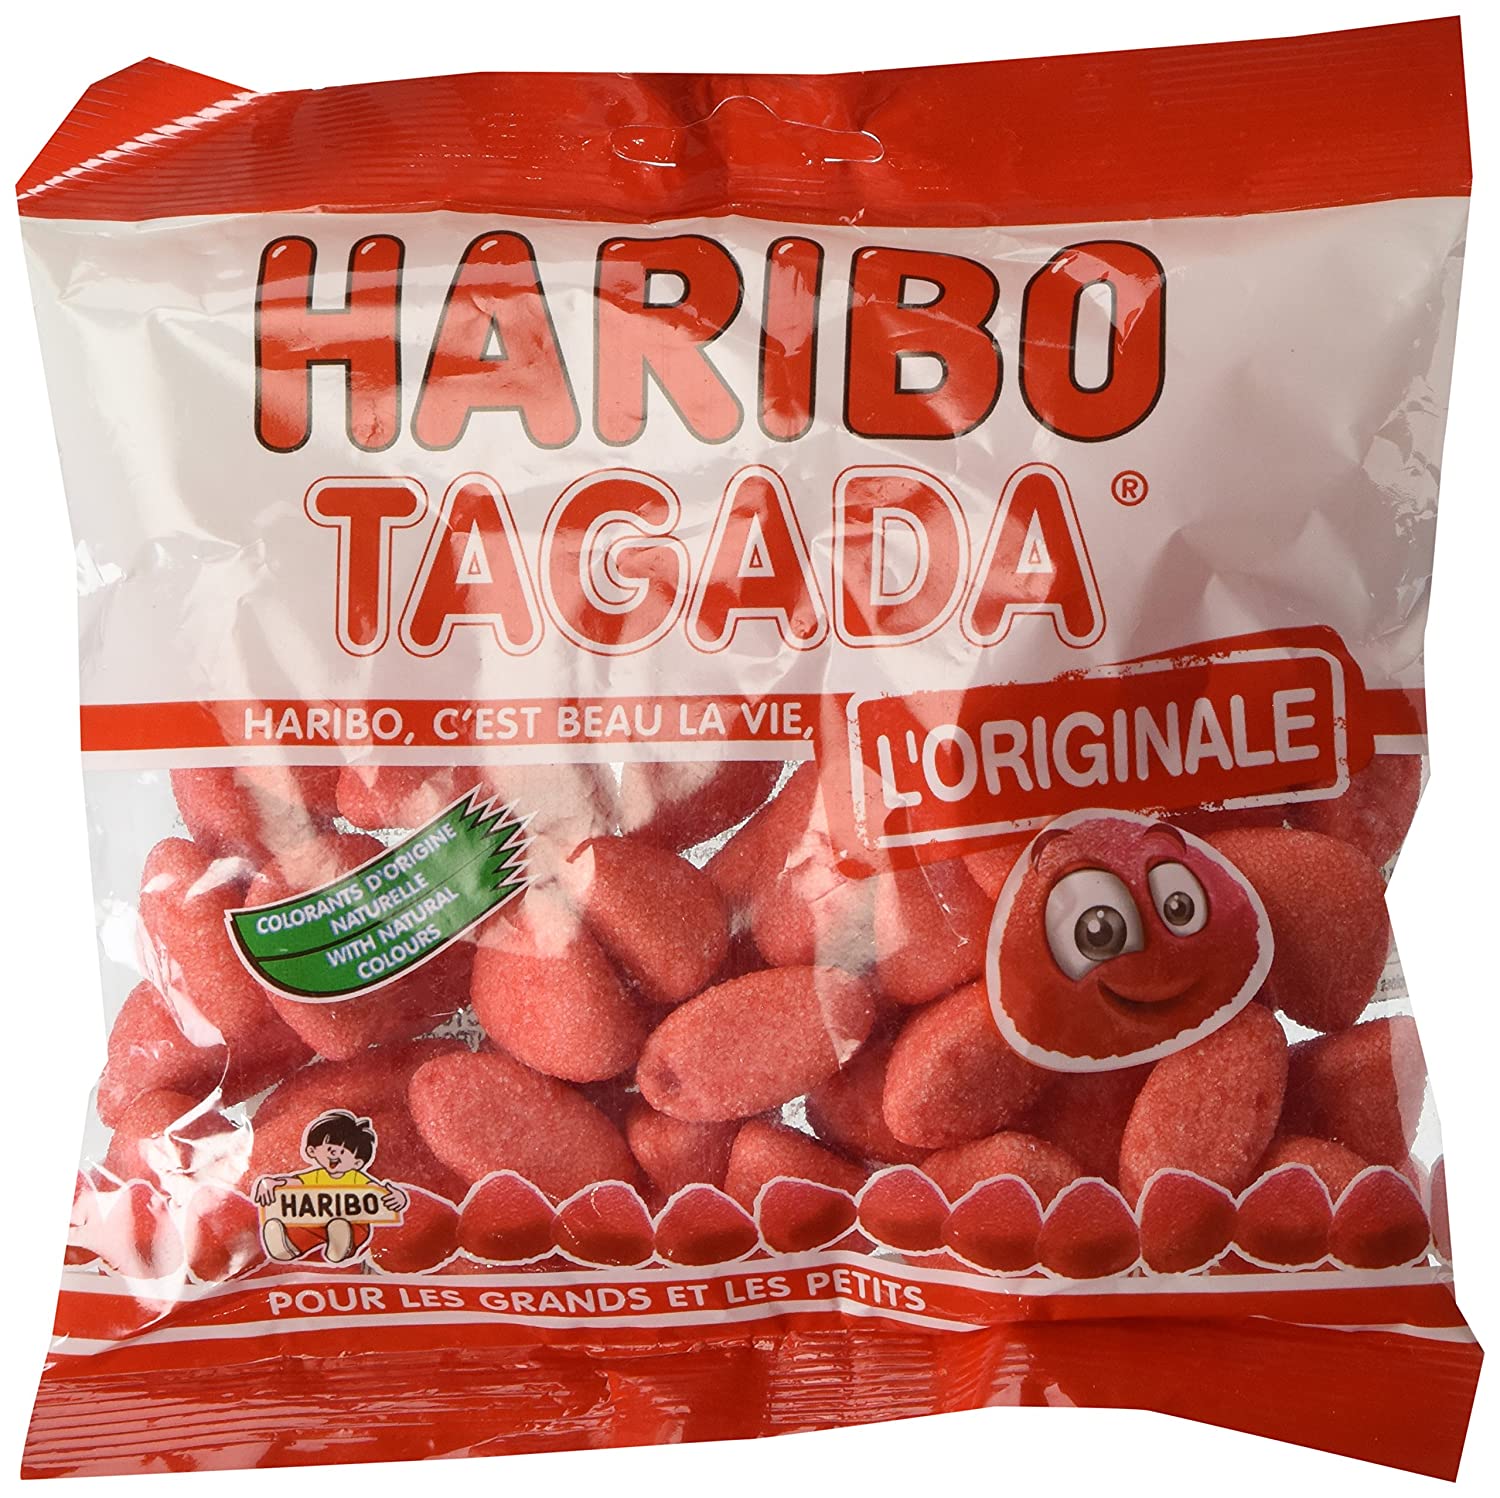 French Tagada Strawberry Haribo Candy 120g